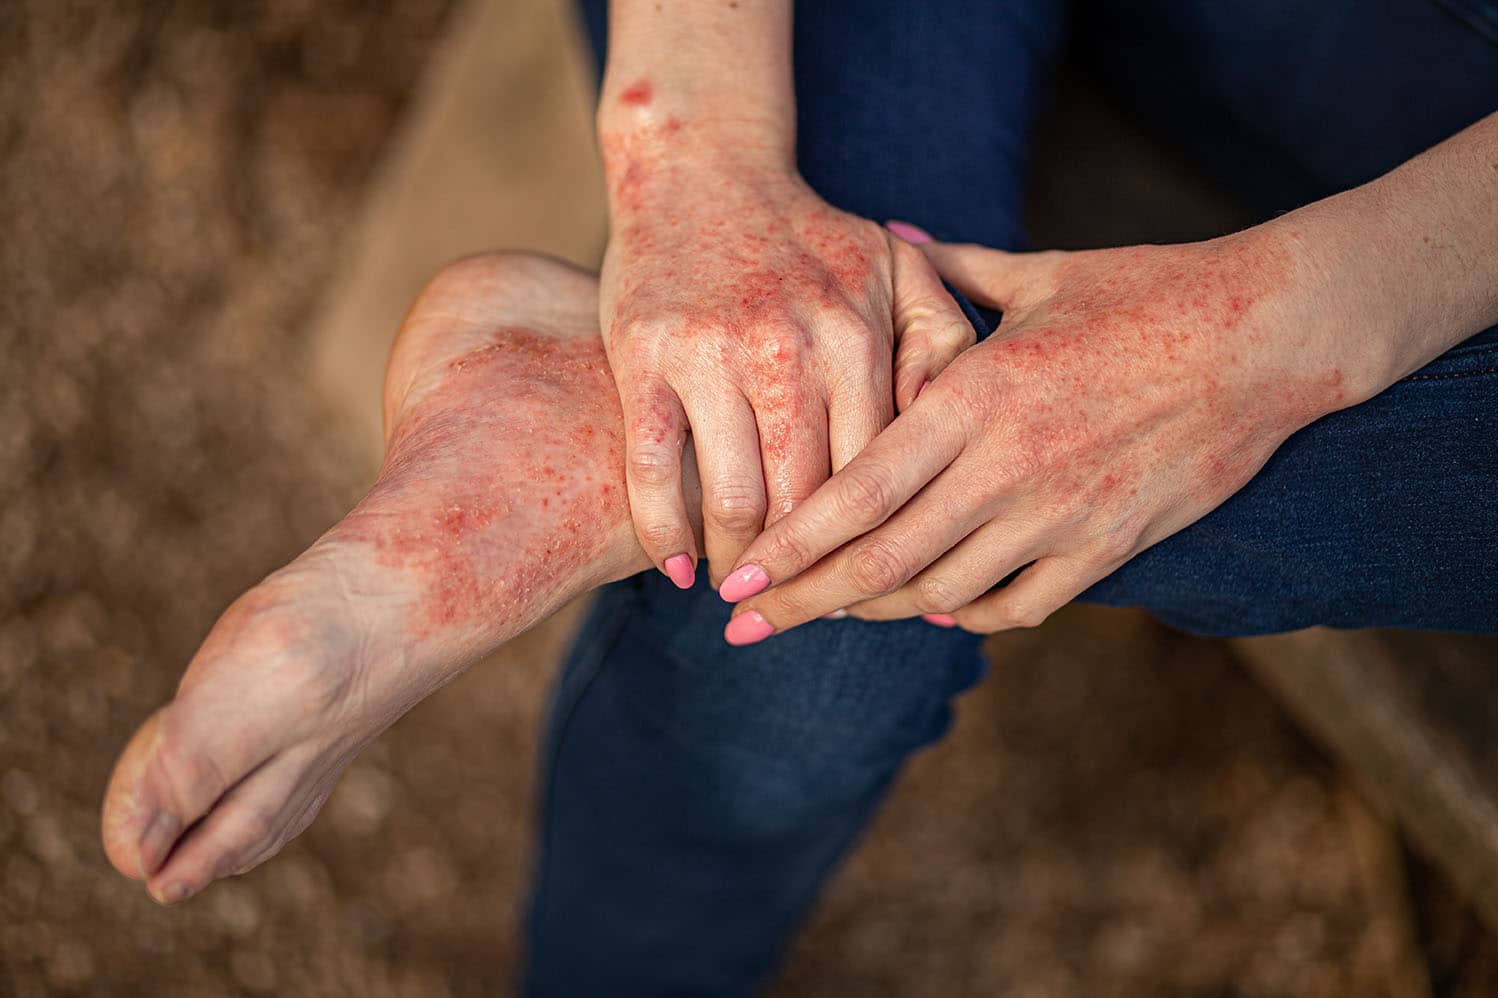 Eczema dermatitis on hands and feet.